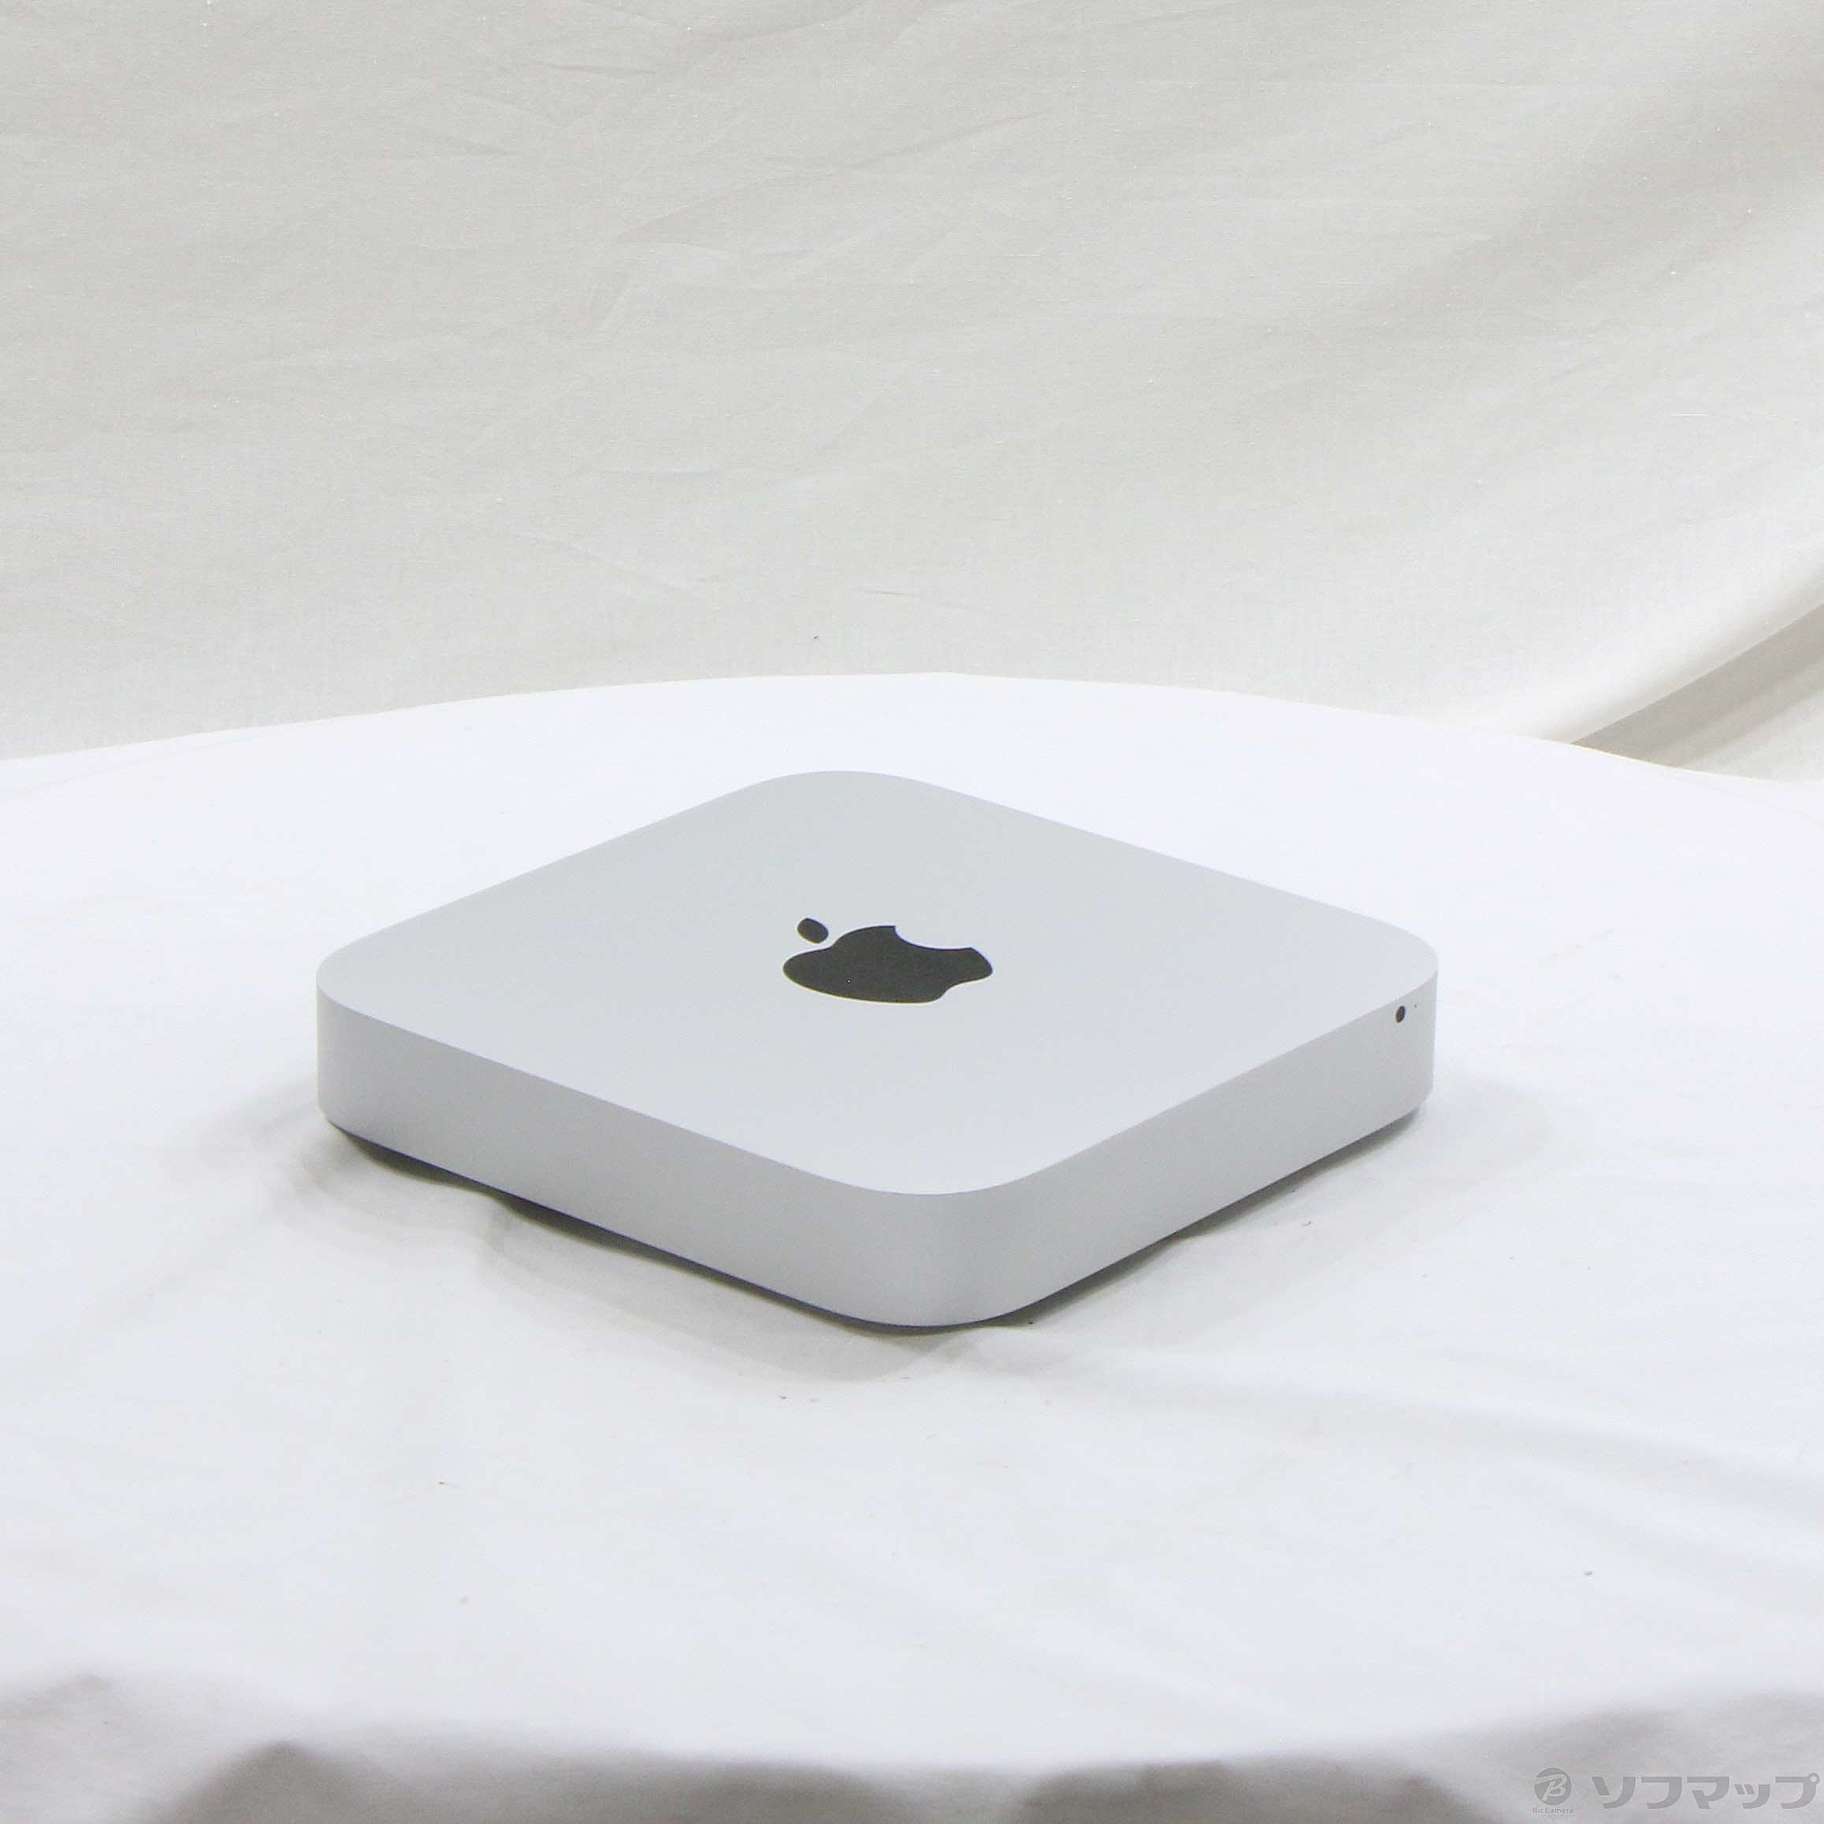 中古)Apple Mac mini Late 2014 MGEQ2J A Core_i5 2.8GHz 16GB